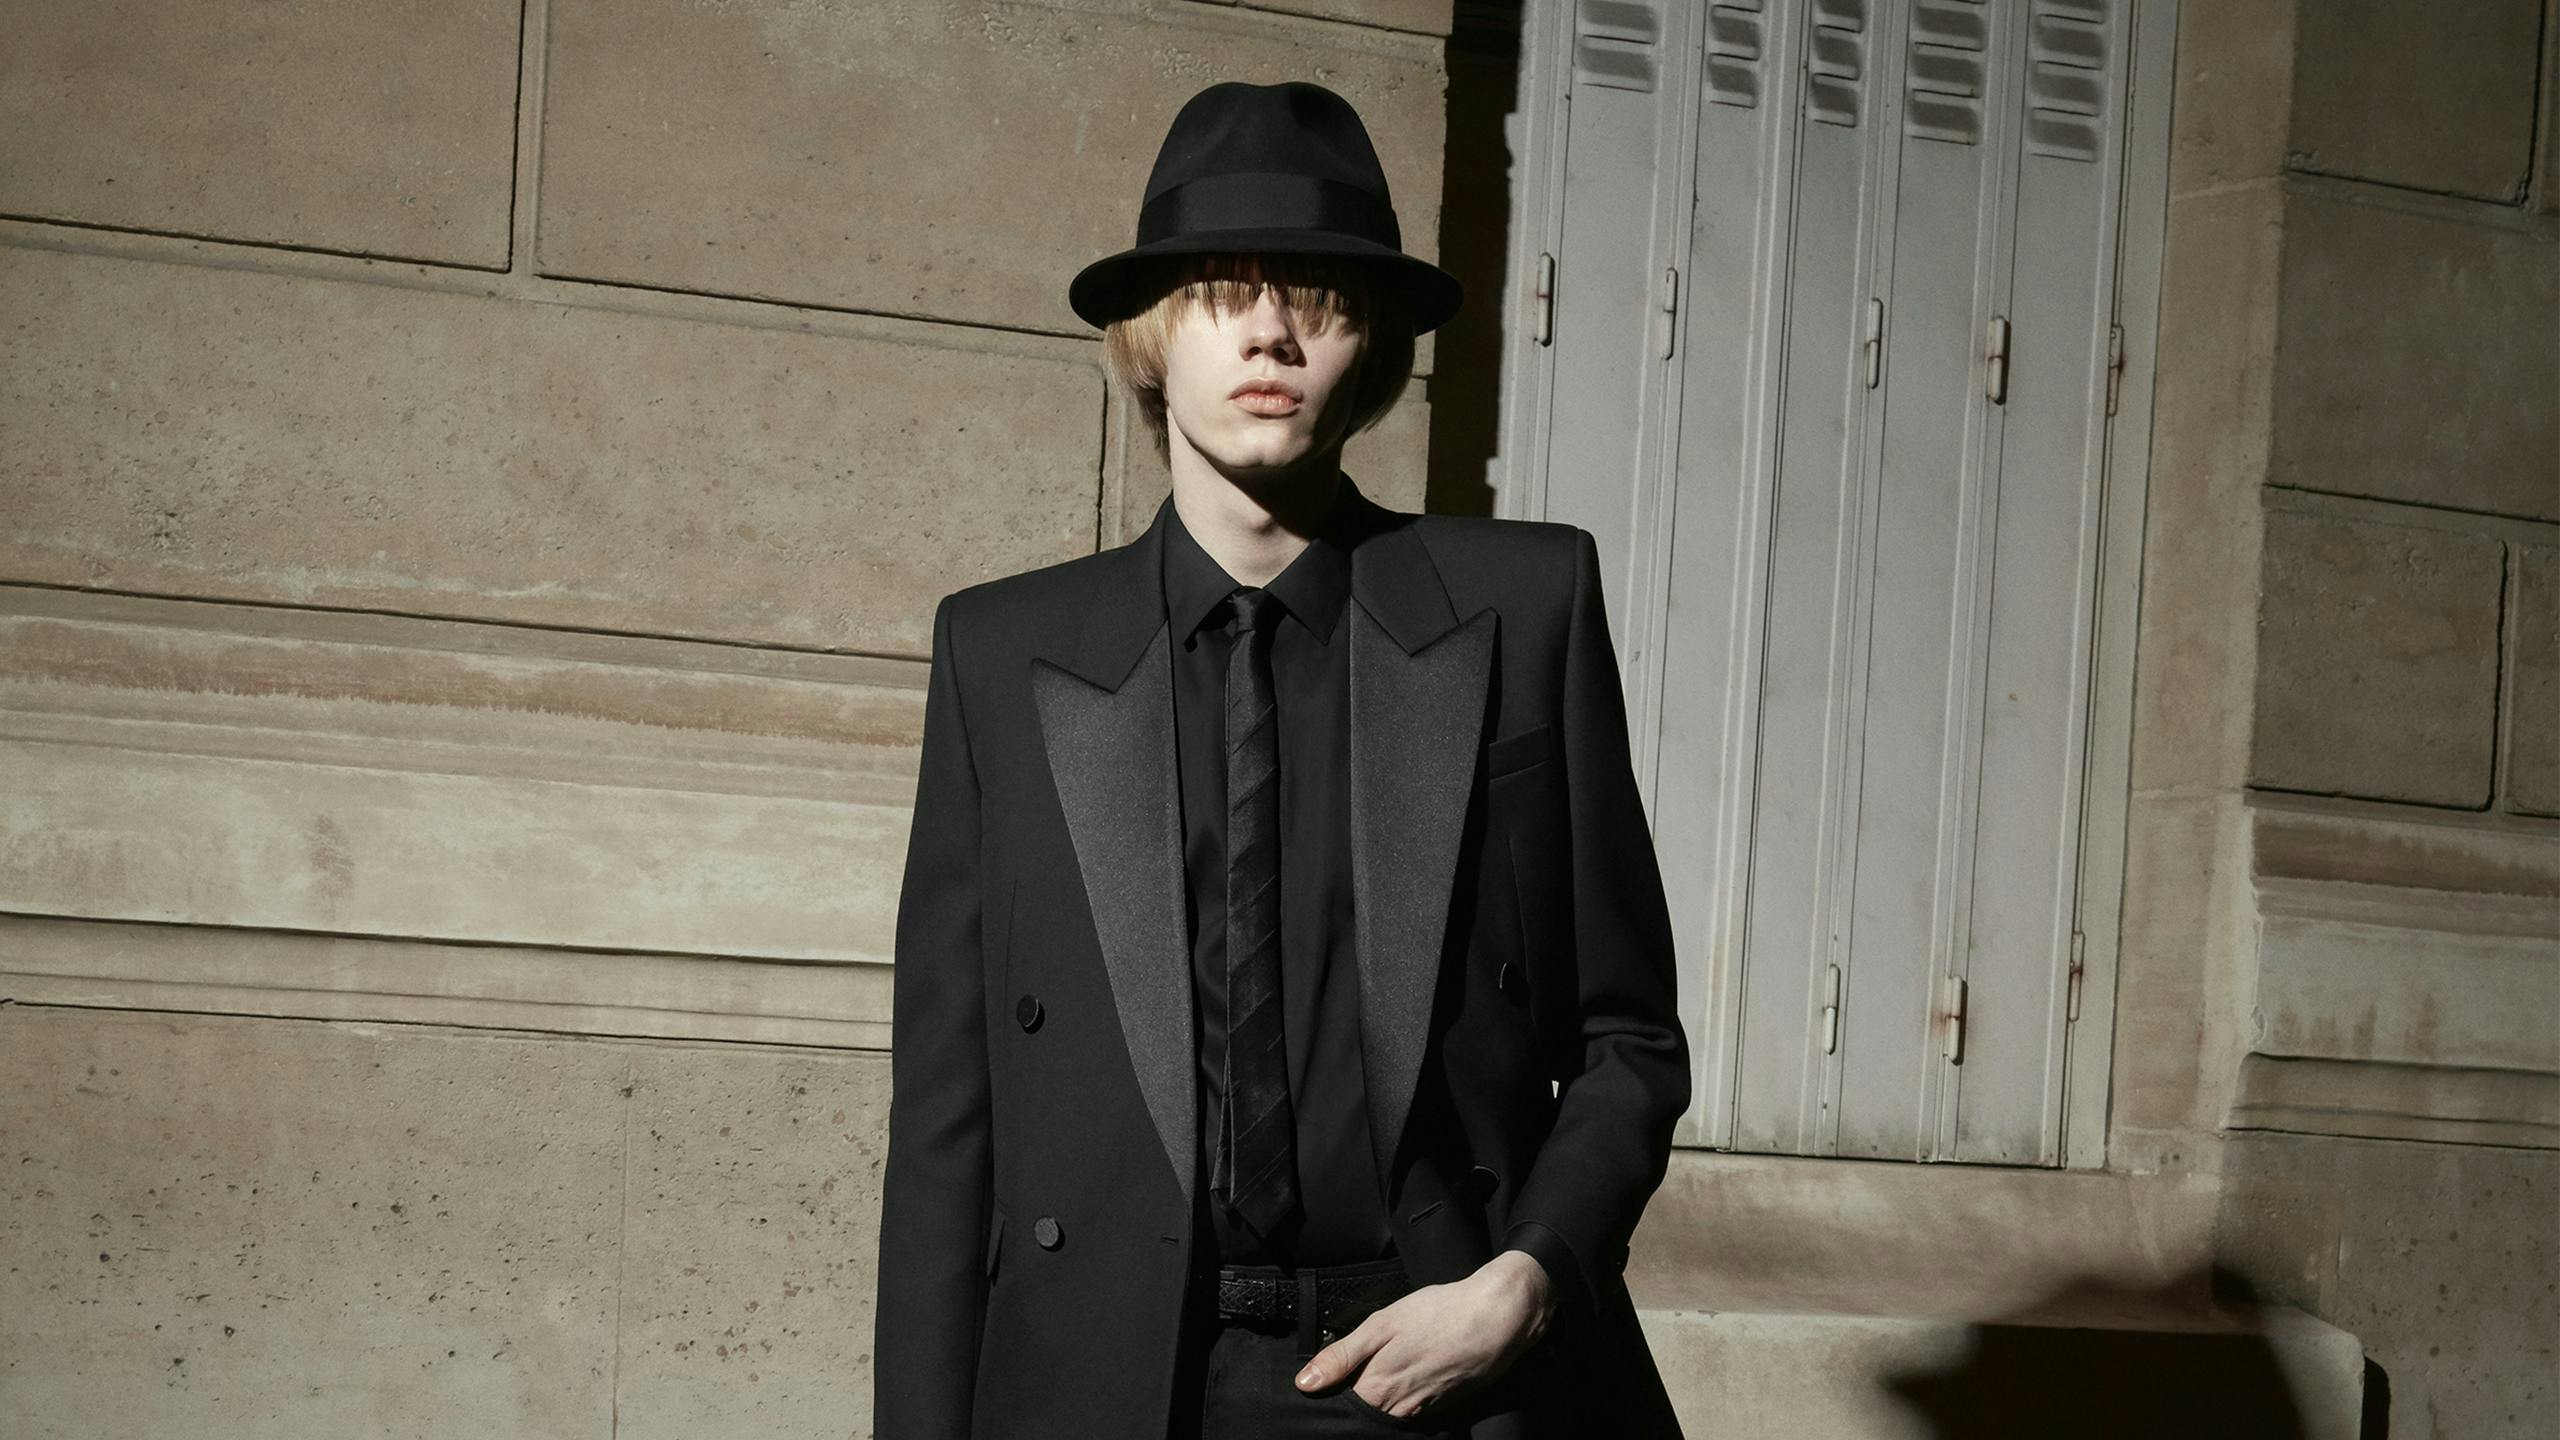 clothing apparel suit overcoat coat tuxedo tie accessories person hat